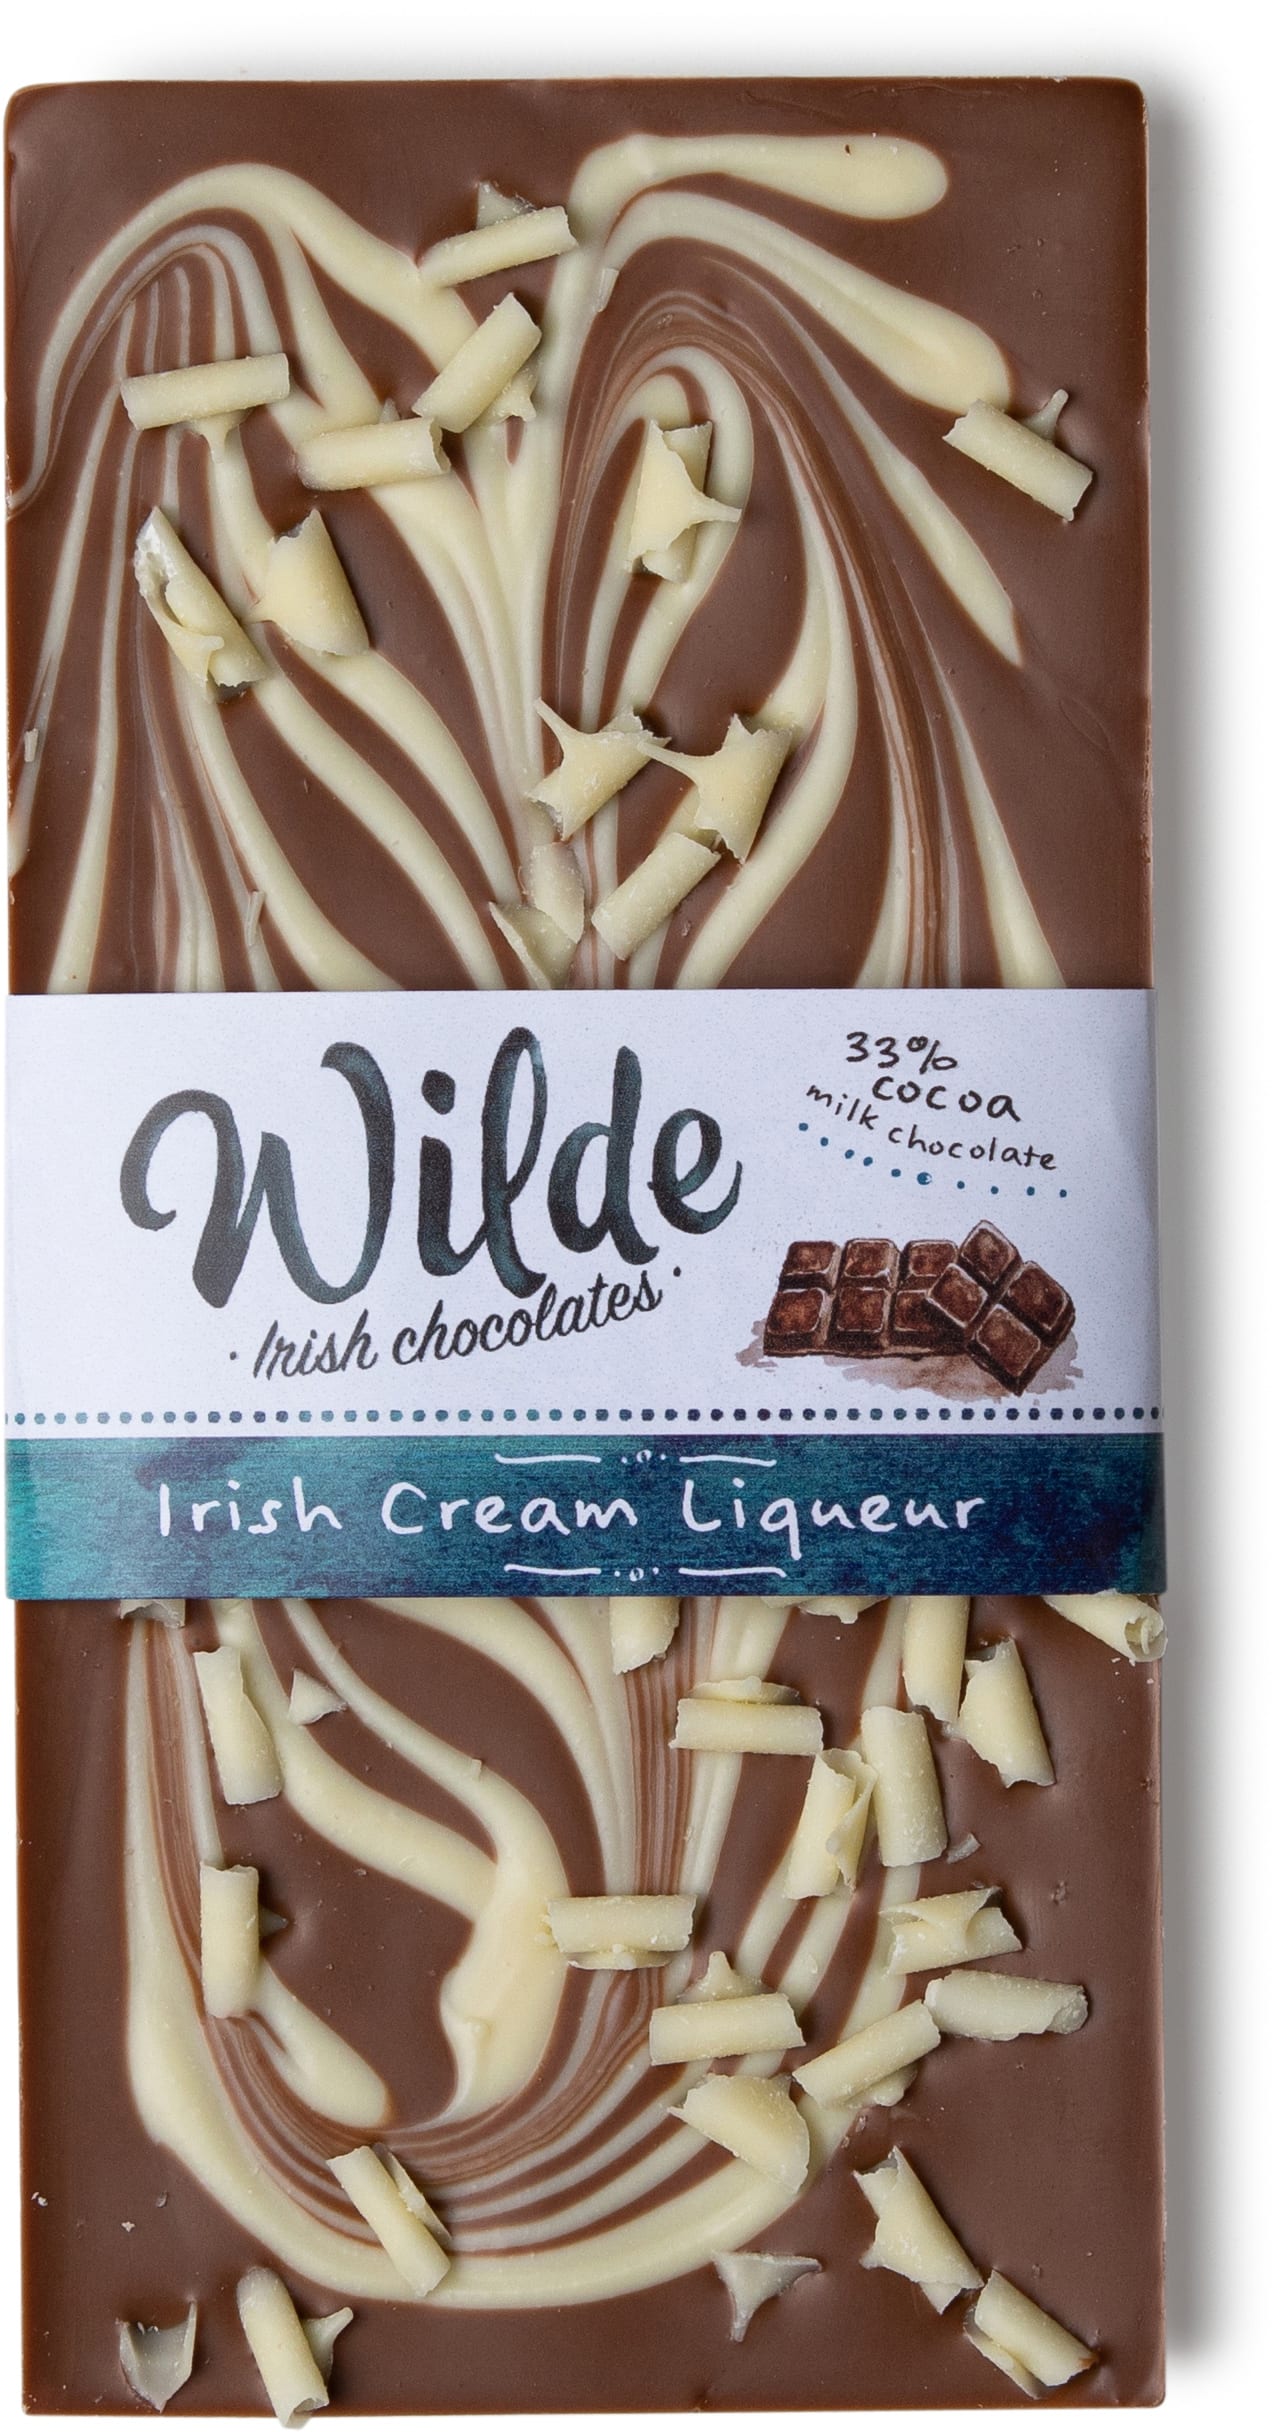 Irish cream liqueur chocolate bar - Wilde Irish Chocolates